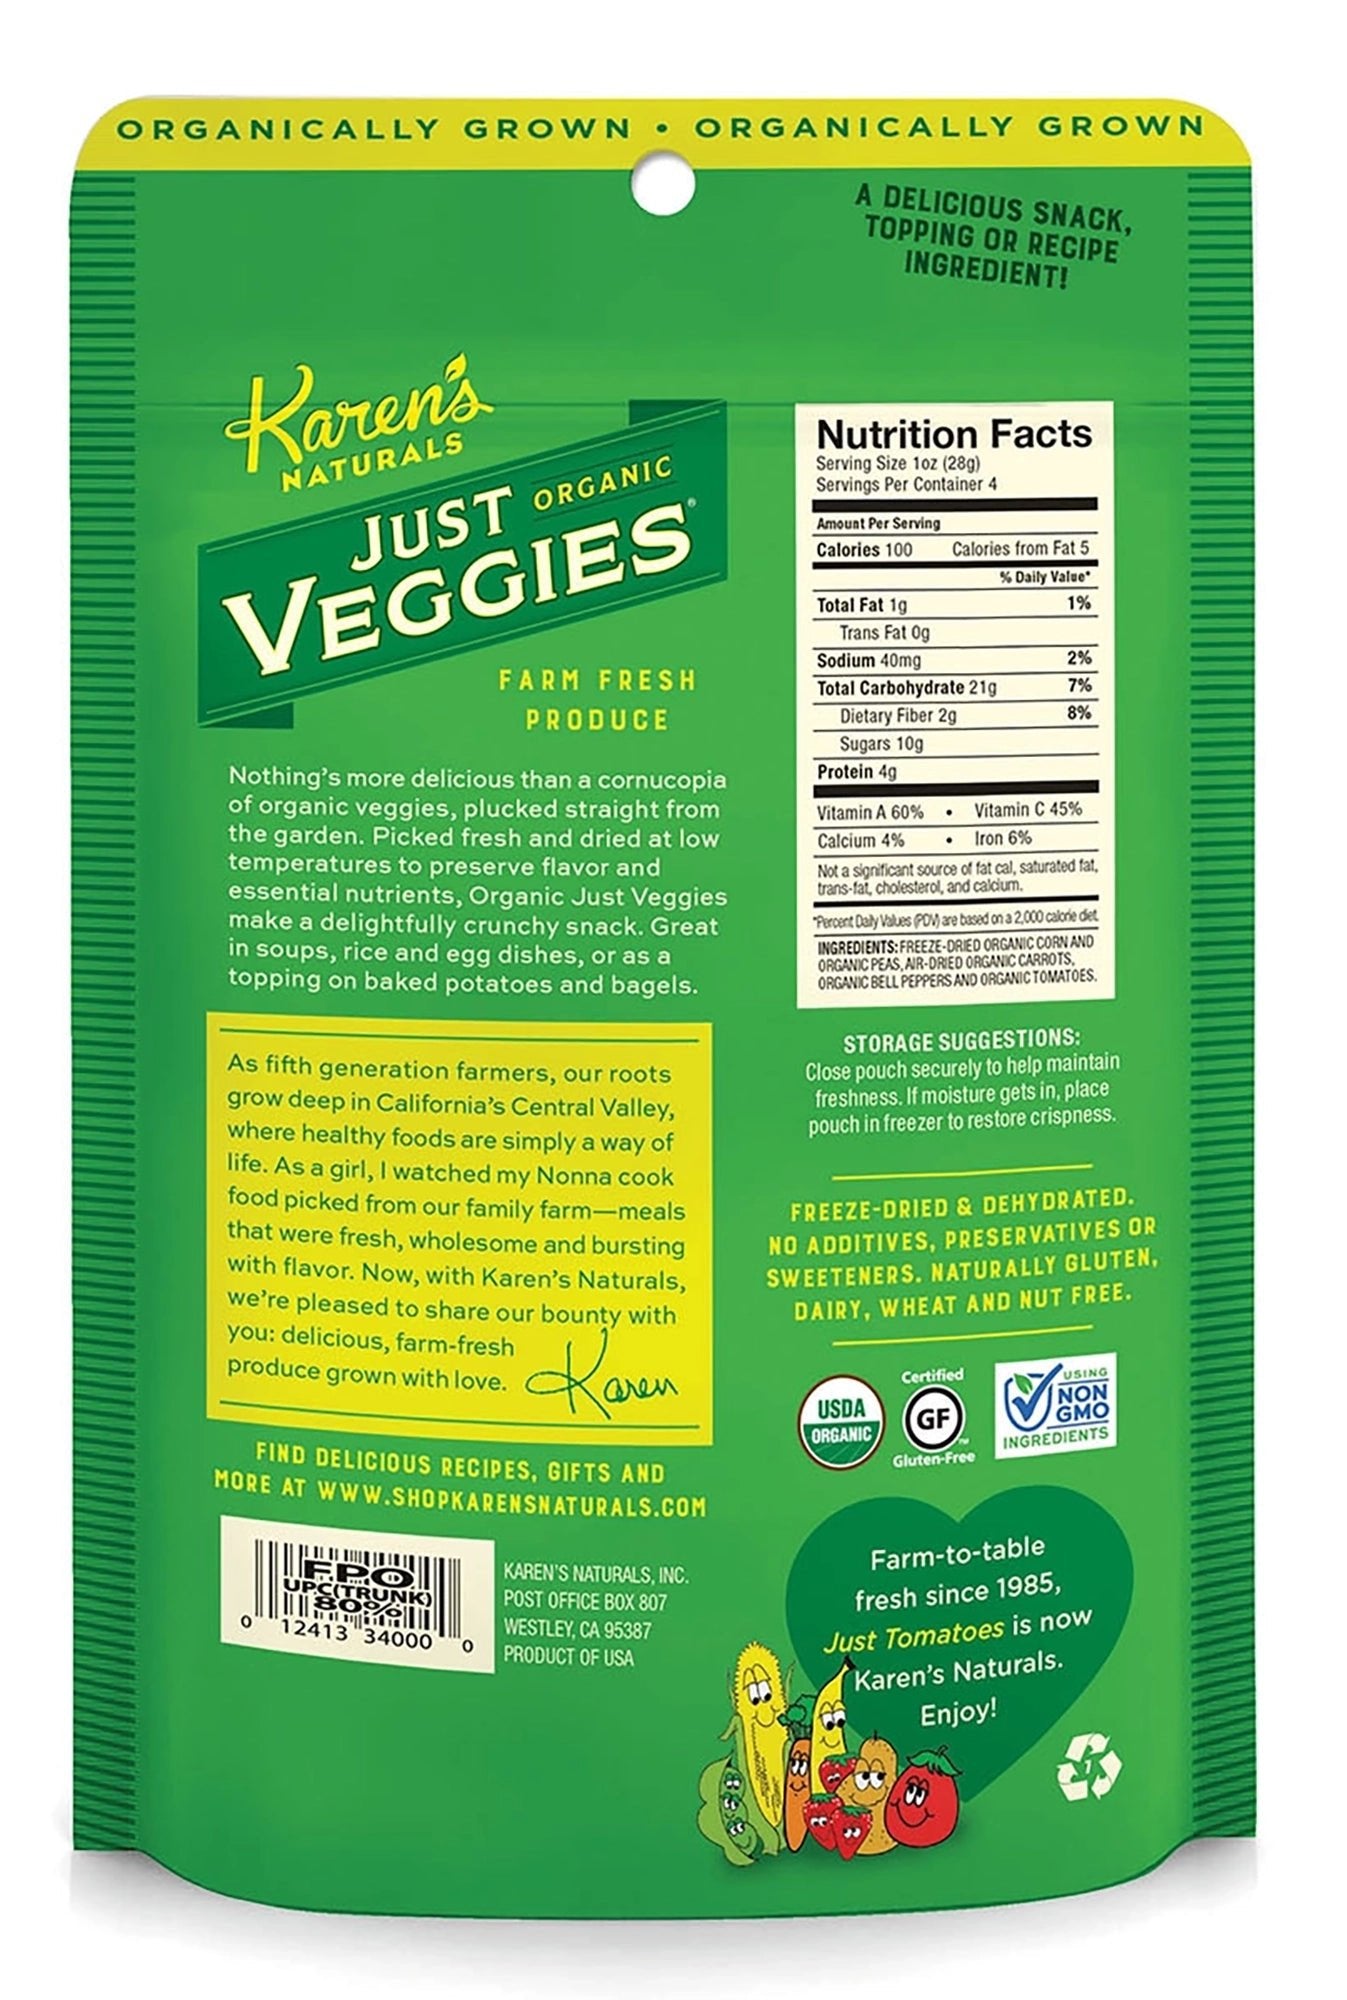 Organic Just Veggies - Karen's Naturals